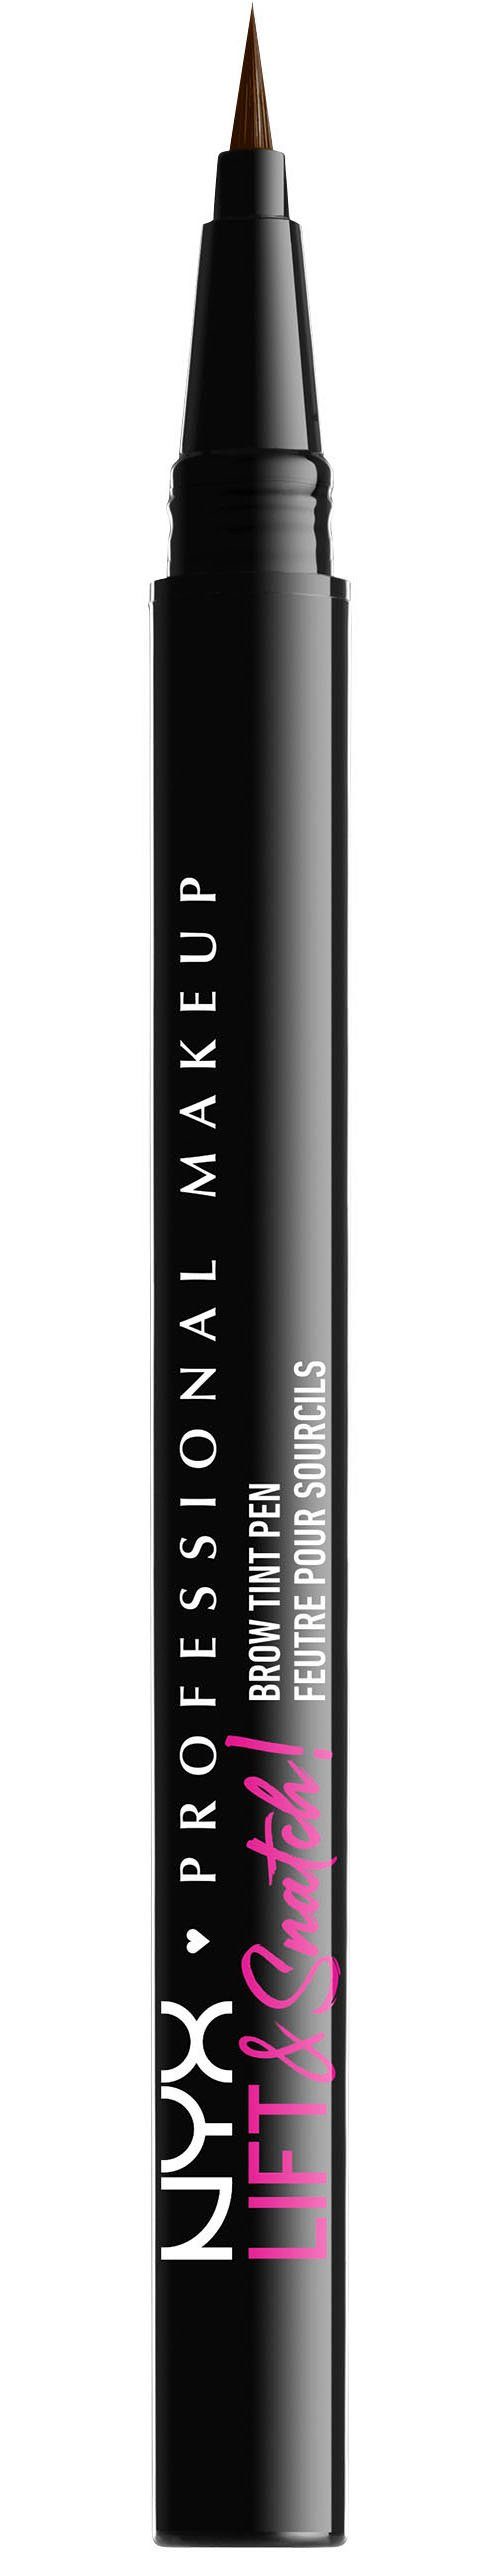 Makeup Micro-Spitze Snatch Flexible Lift Augenbrauen-Stift NYX leichte Brow Tint Handhabung Professional & Pen, für